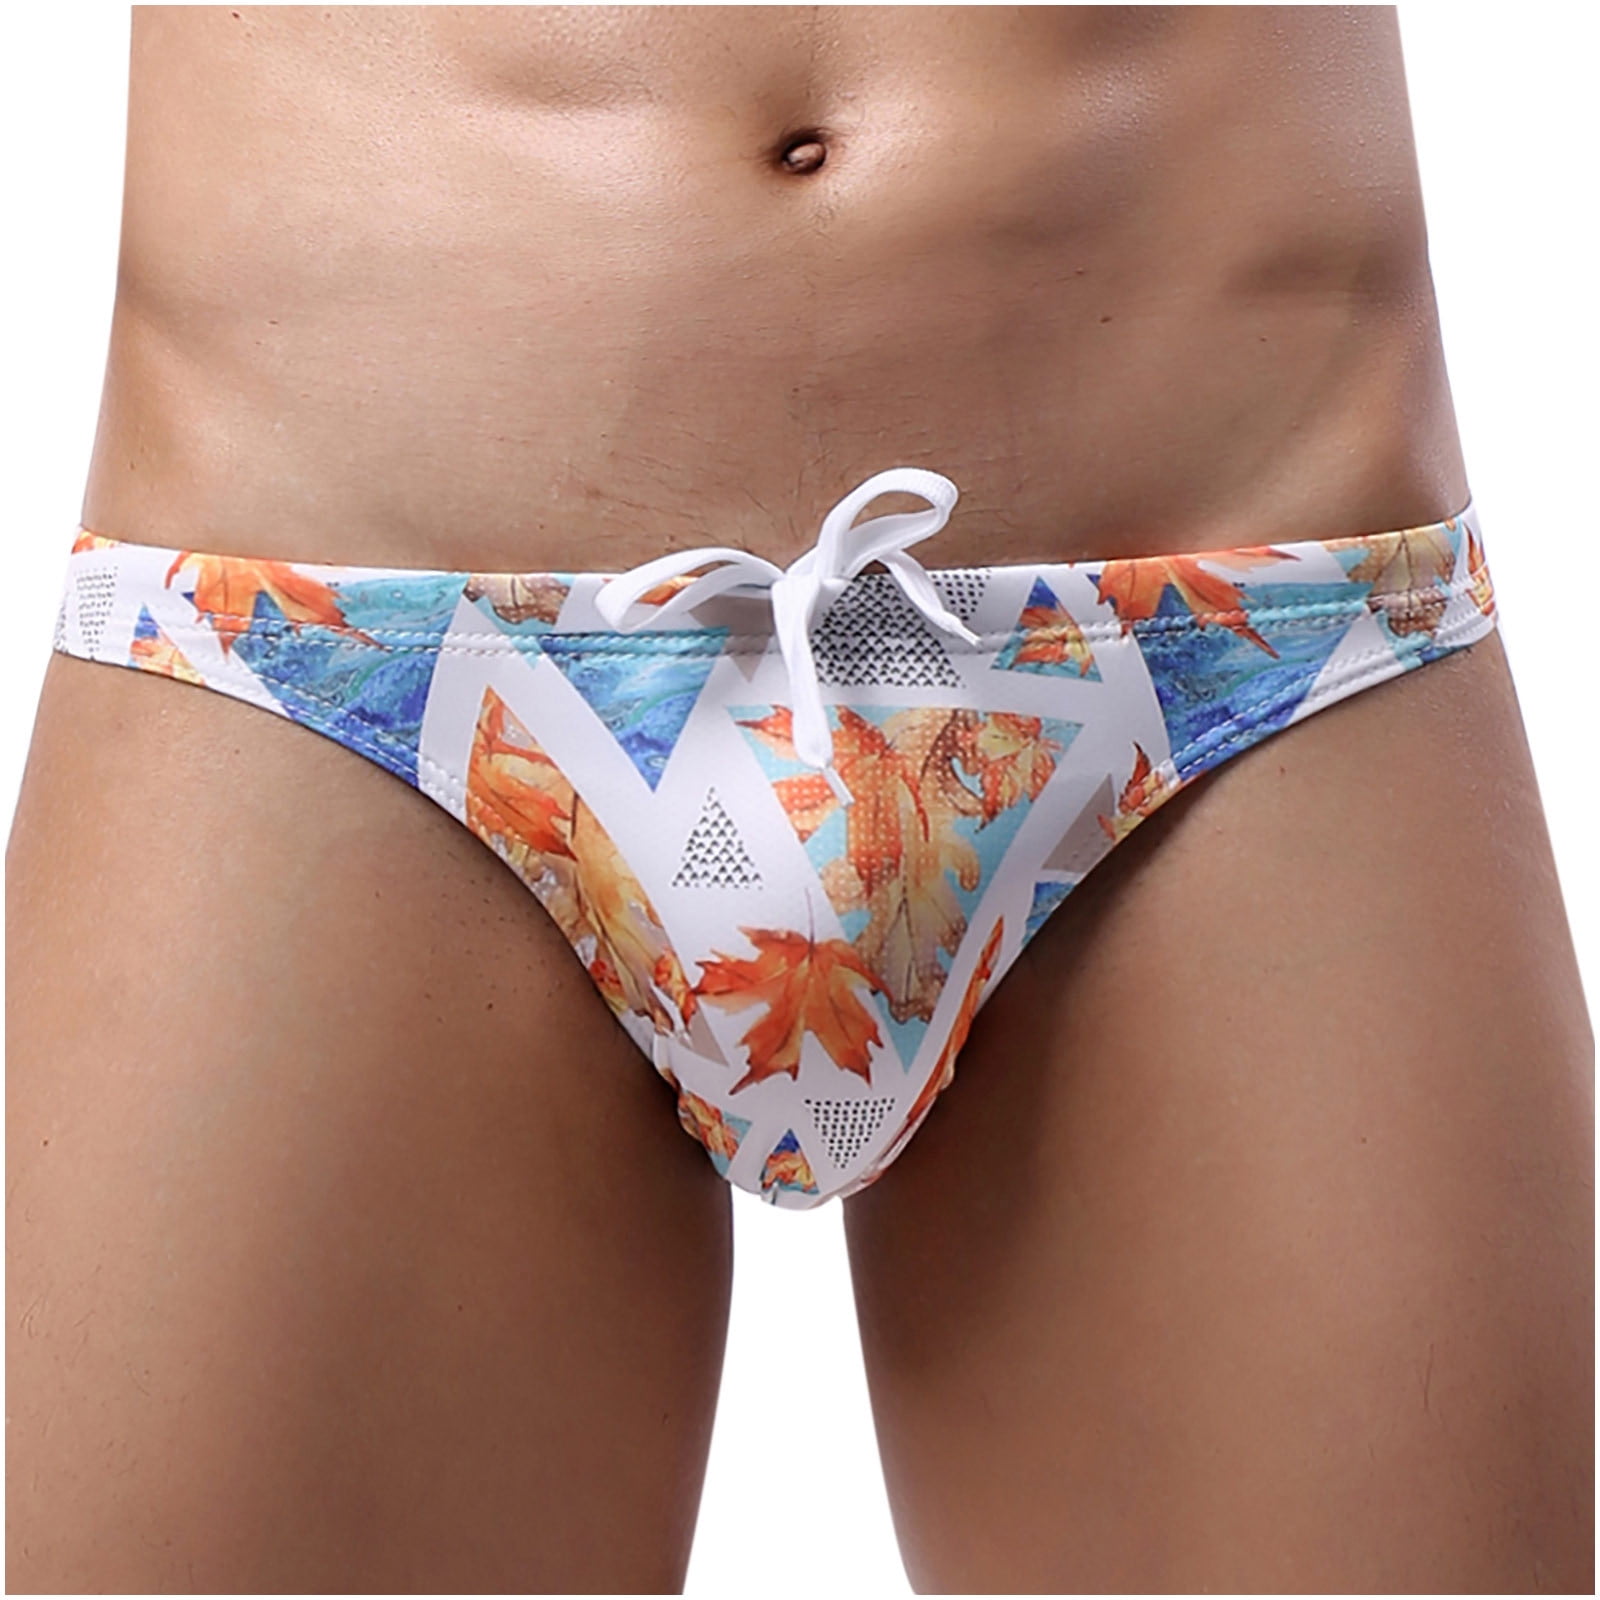 Yubnlvae swimwear for women Men's Underwear Swim Trunks Low-rise Printing  Smooth Men's Brief Swimming Briefs (Orange M) 